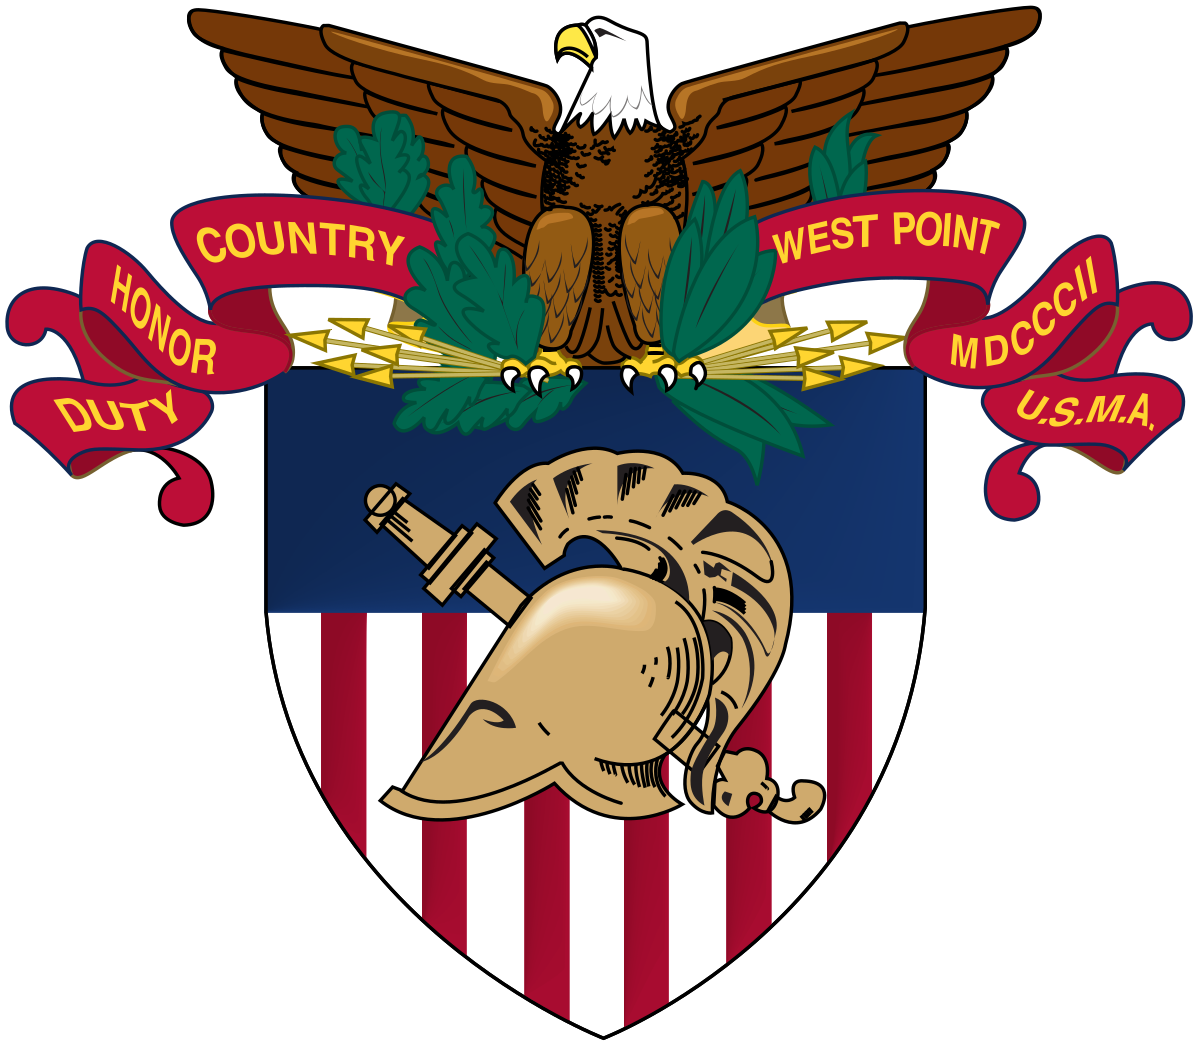 USMA West Point logo